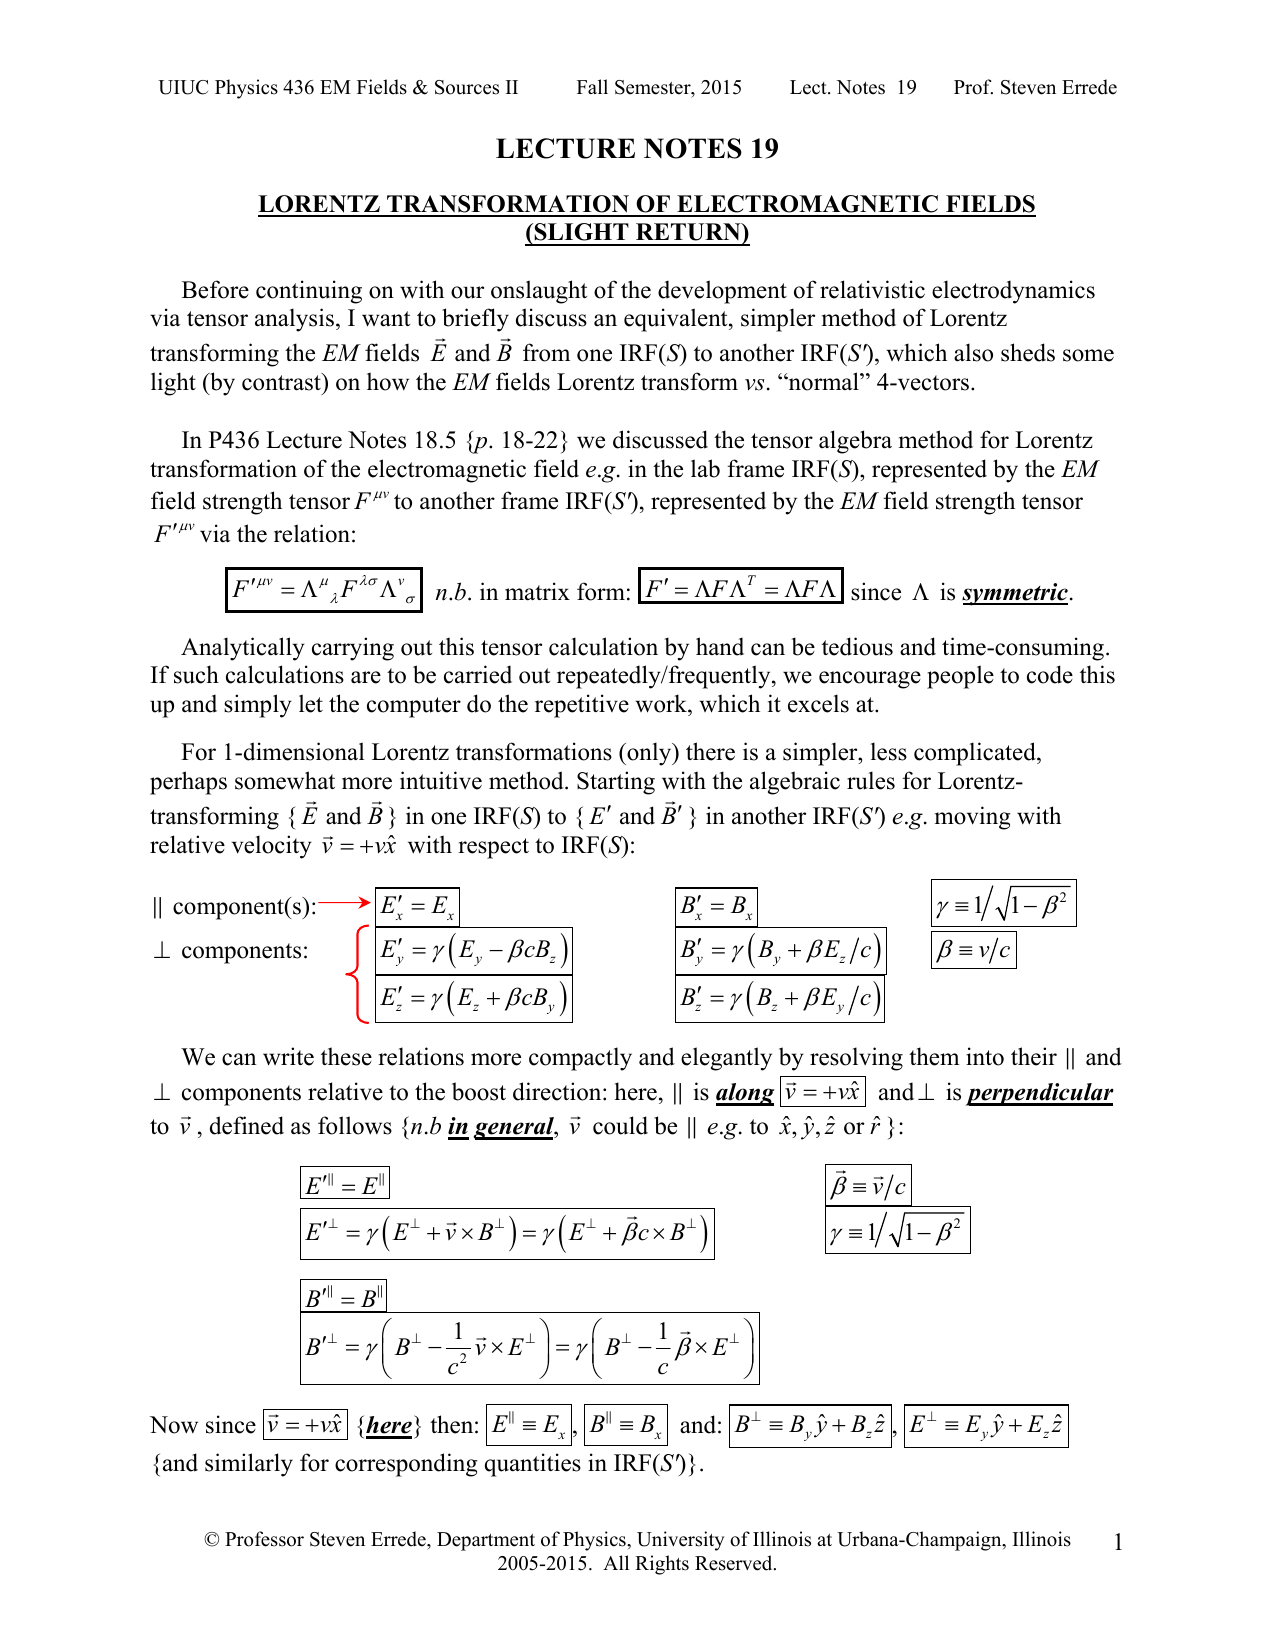 Lecture Notes 19 Relativistic Electrodynamics